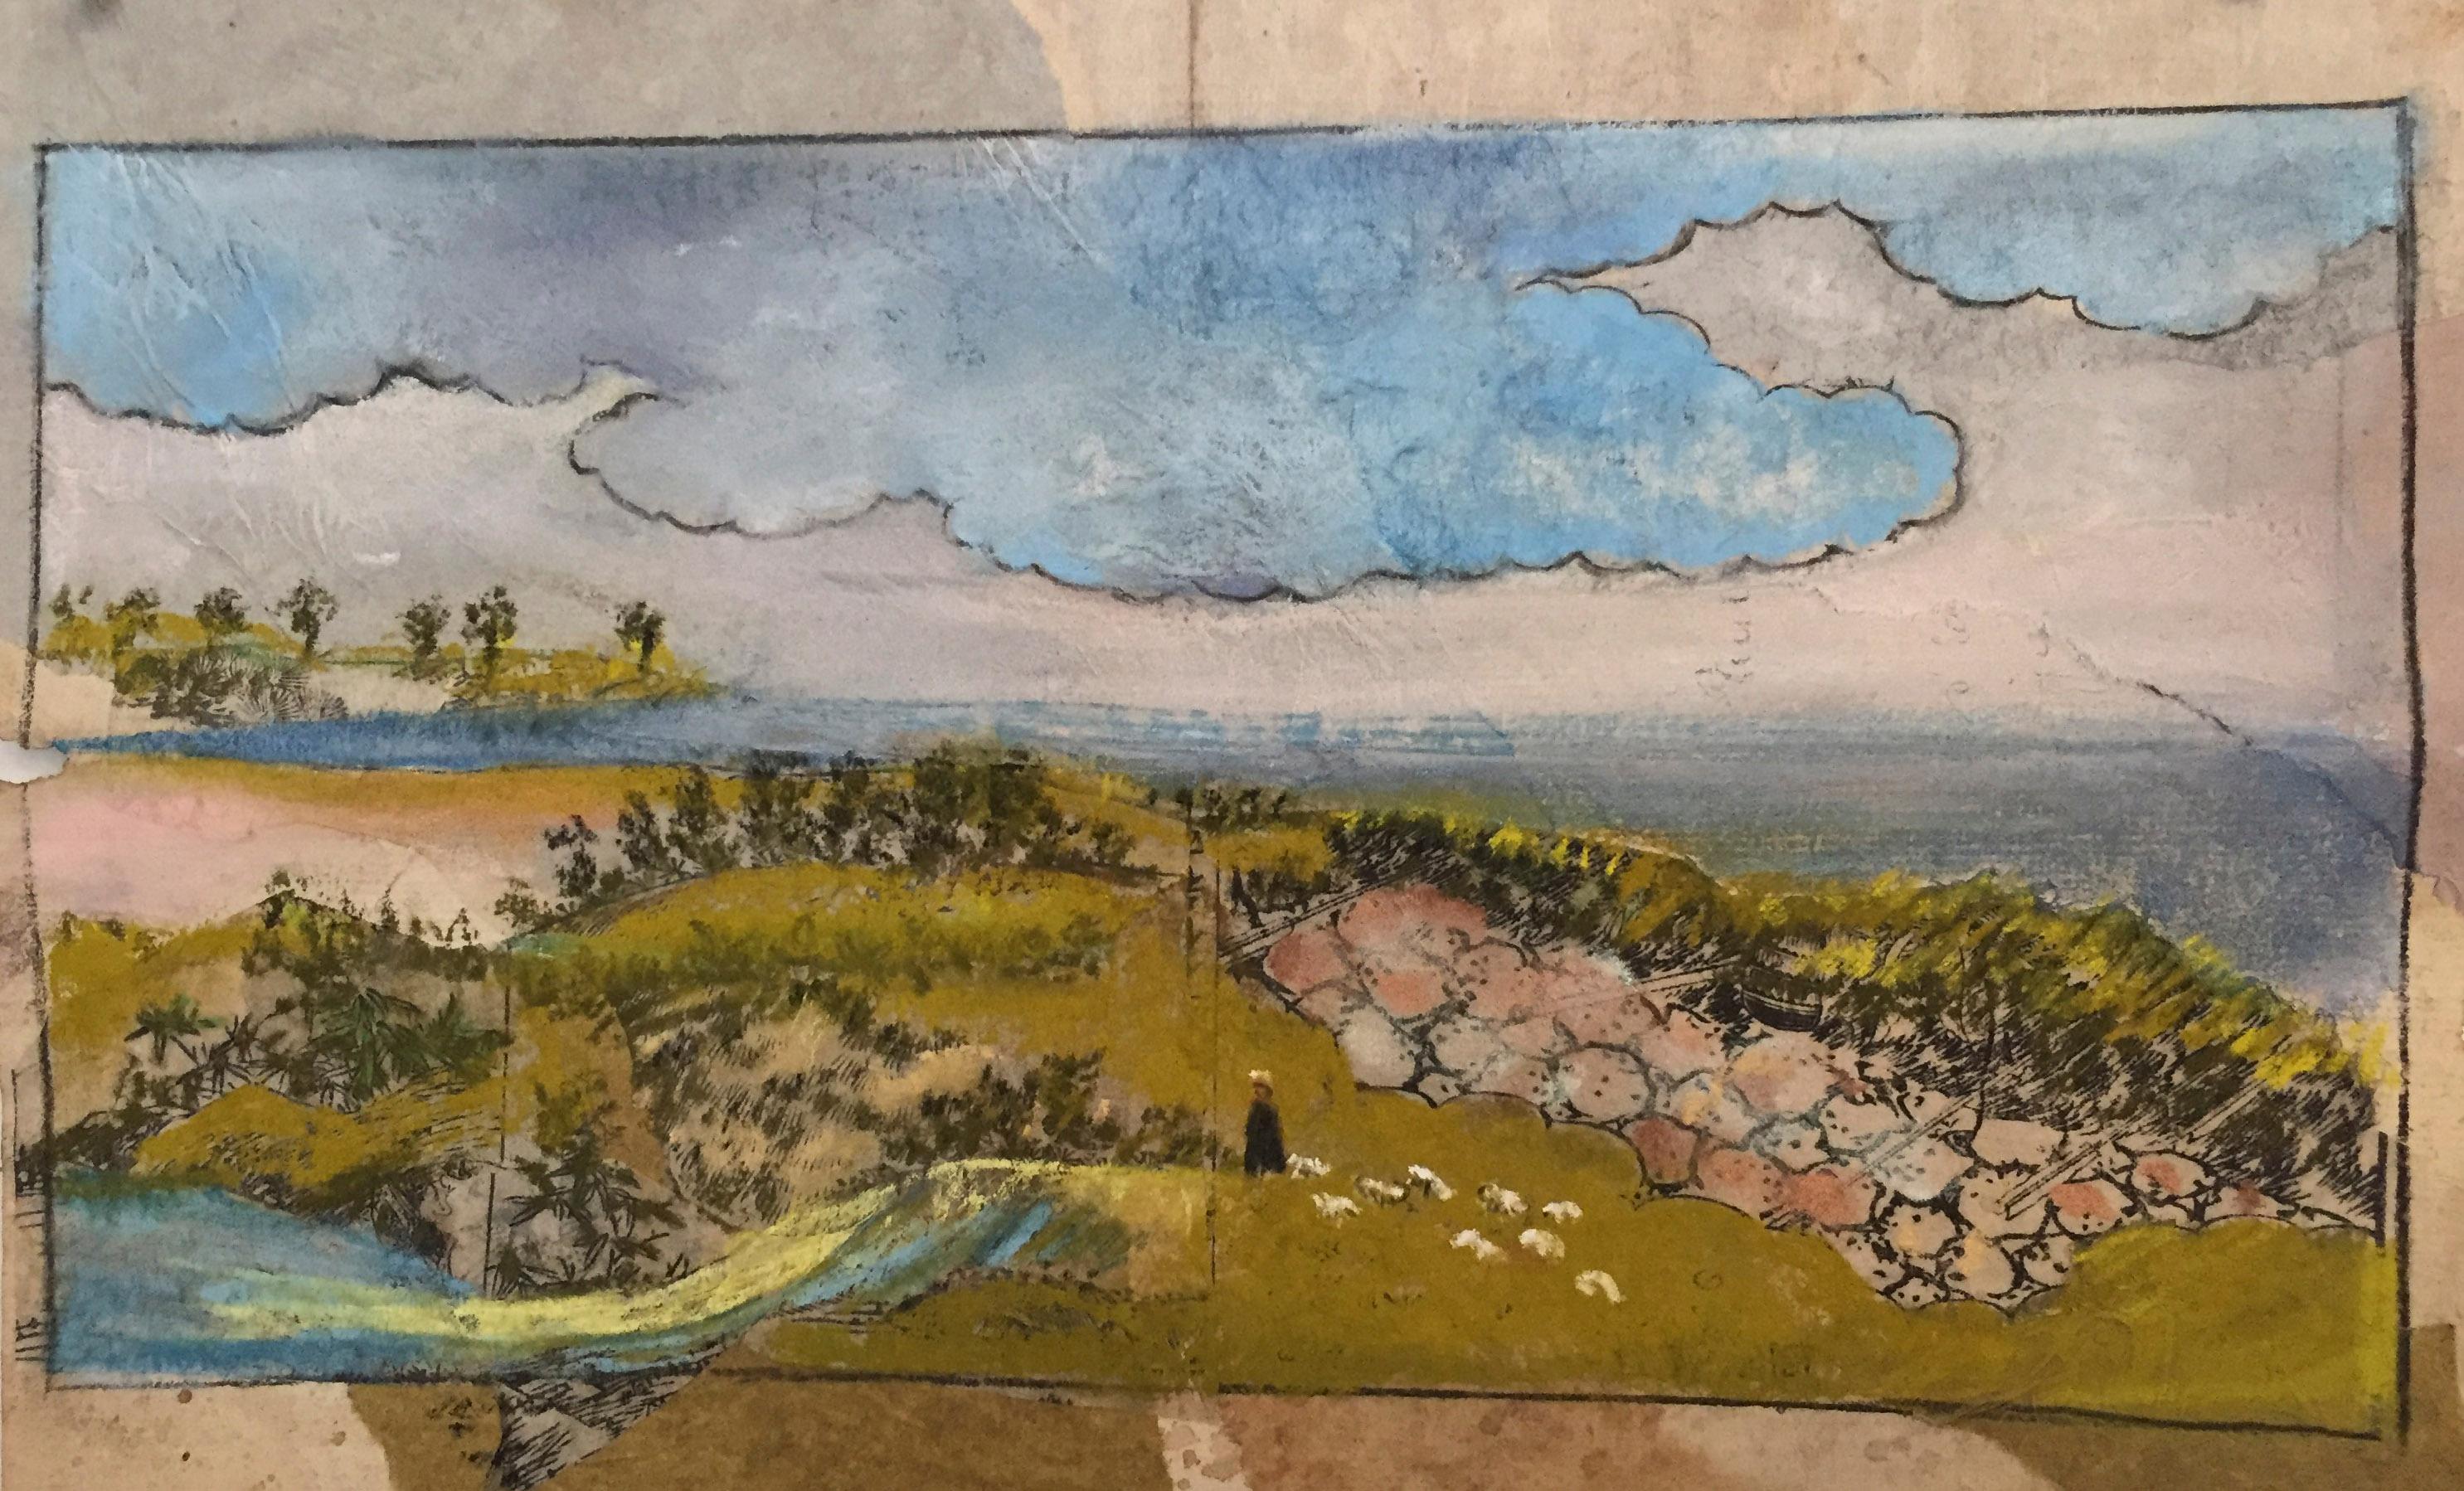 Katherine Bakhoum-Tisne Landscape Painting - "Hilltop" Mixed Media Painting 8" x 12" inch by Katherine Bakhoum Tisné